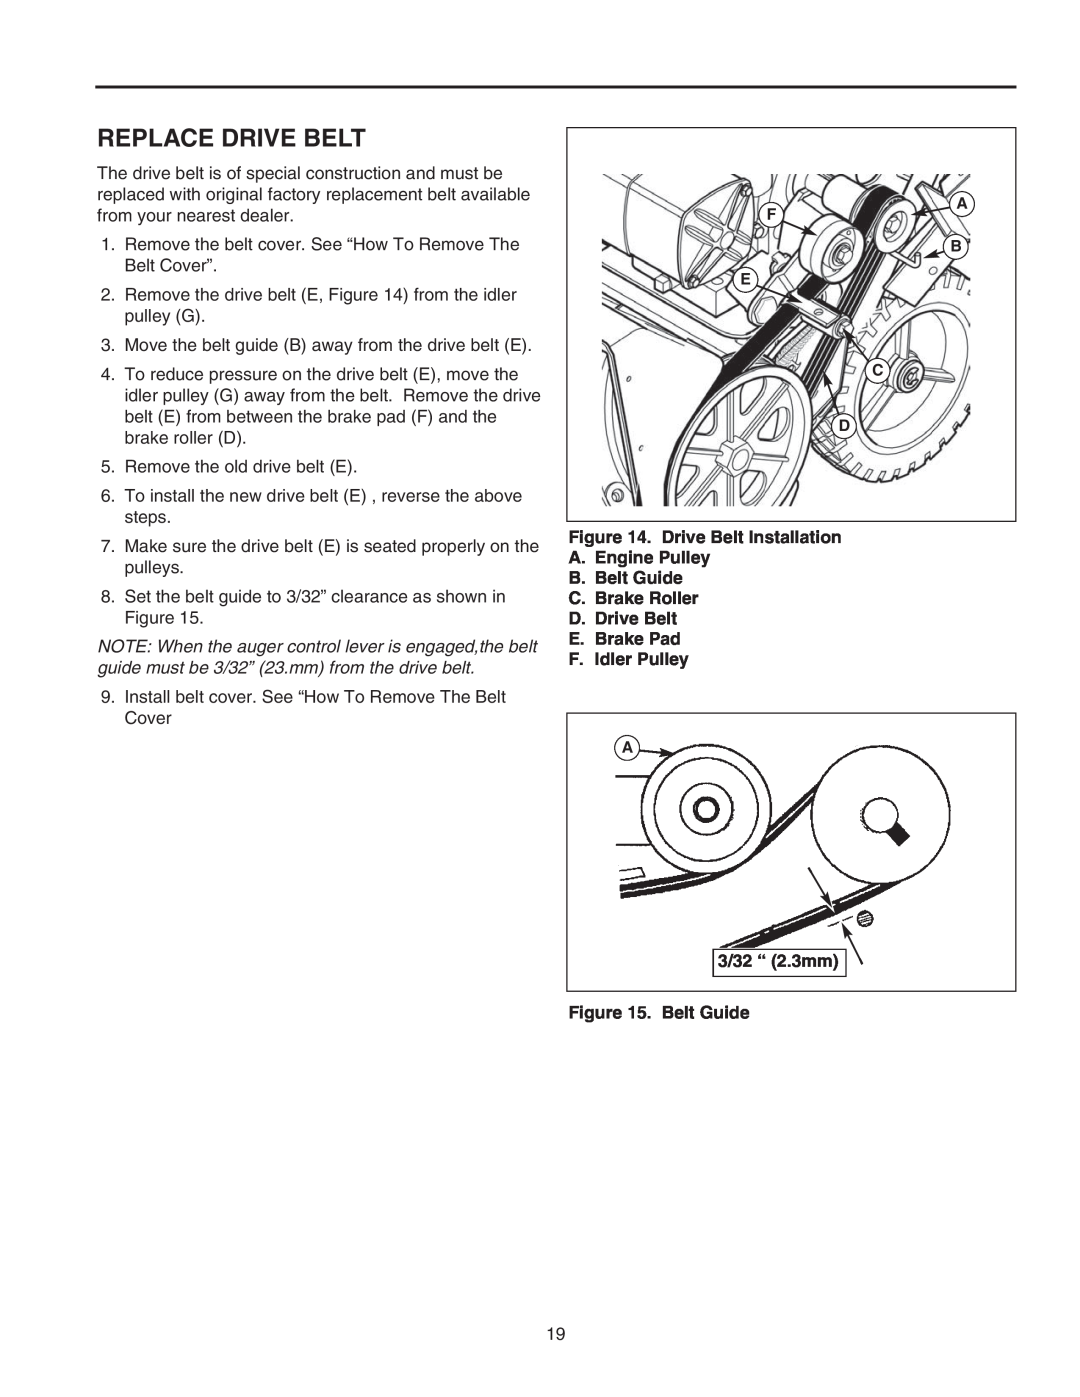 Snapper 522E manual Replace Drive Belt, Drive Belt Installation A. Engine Pulley B. Belt Guide, 3/32 “ 2.3mm . Belt Guide 